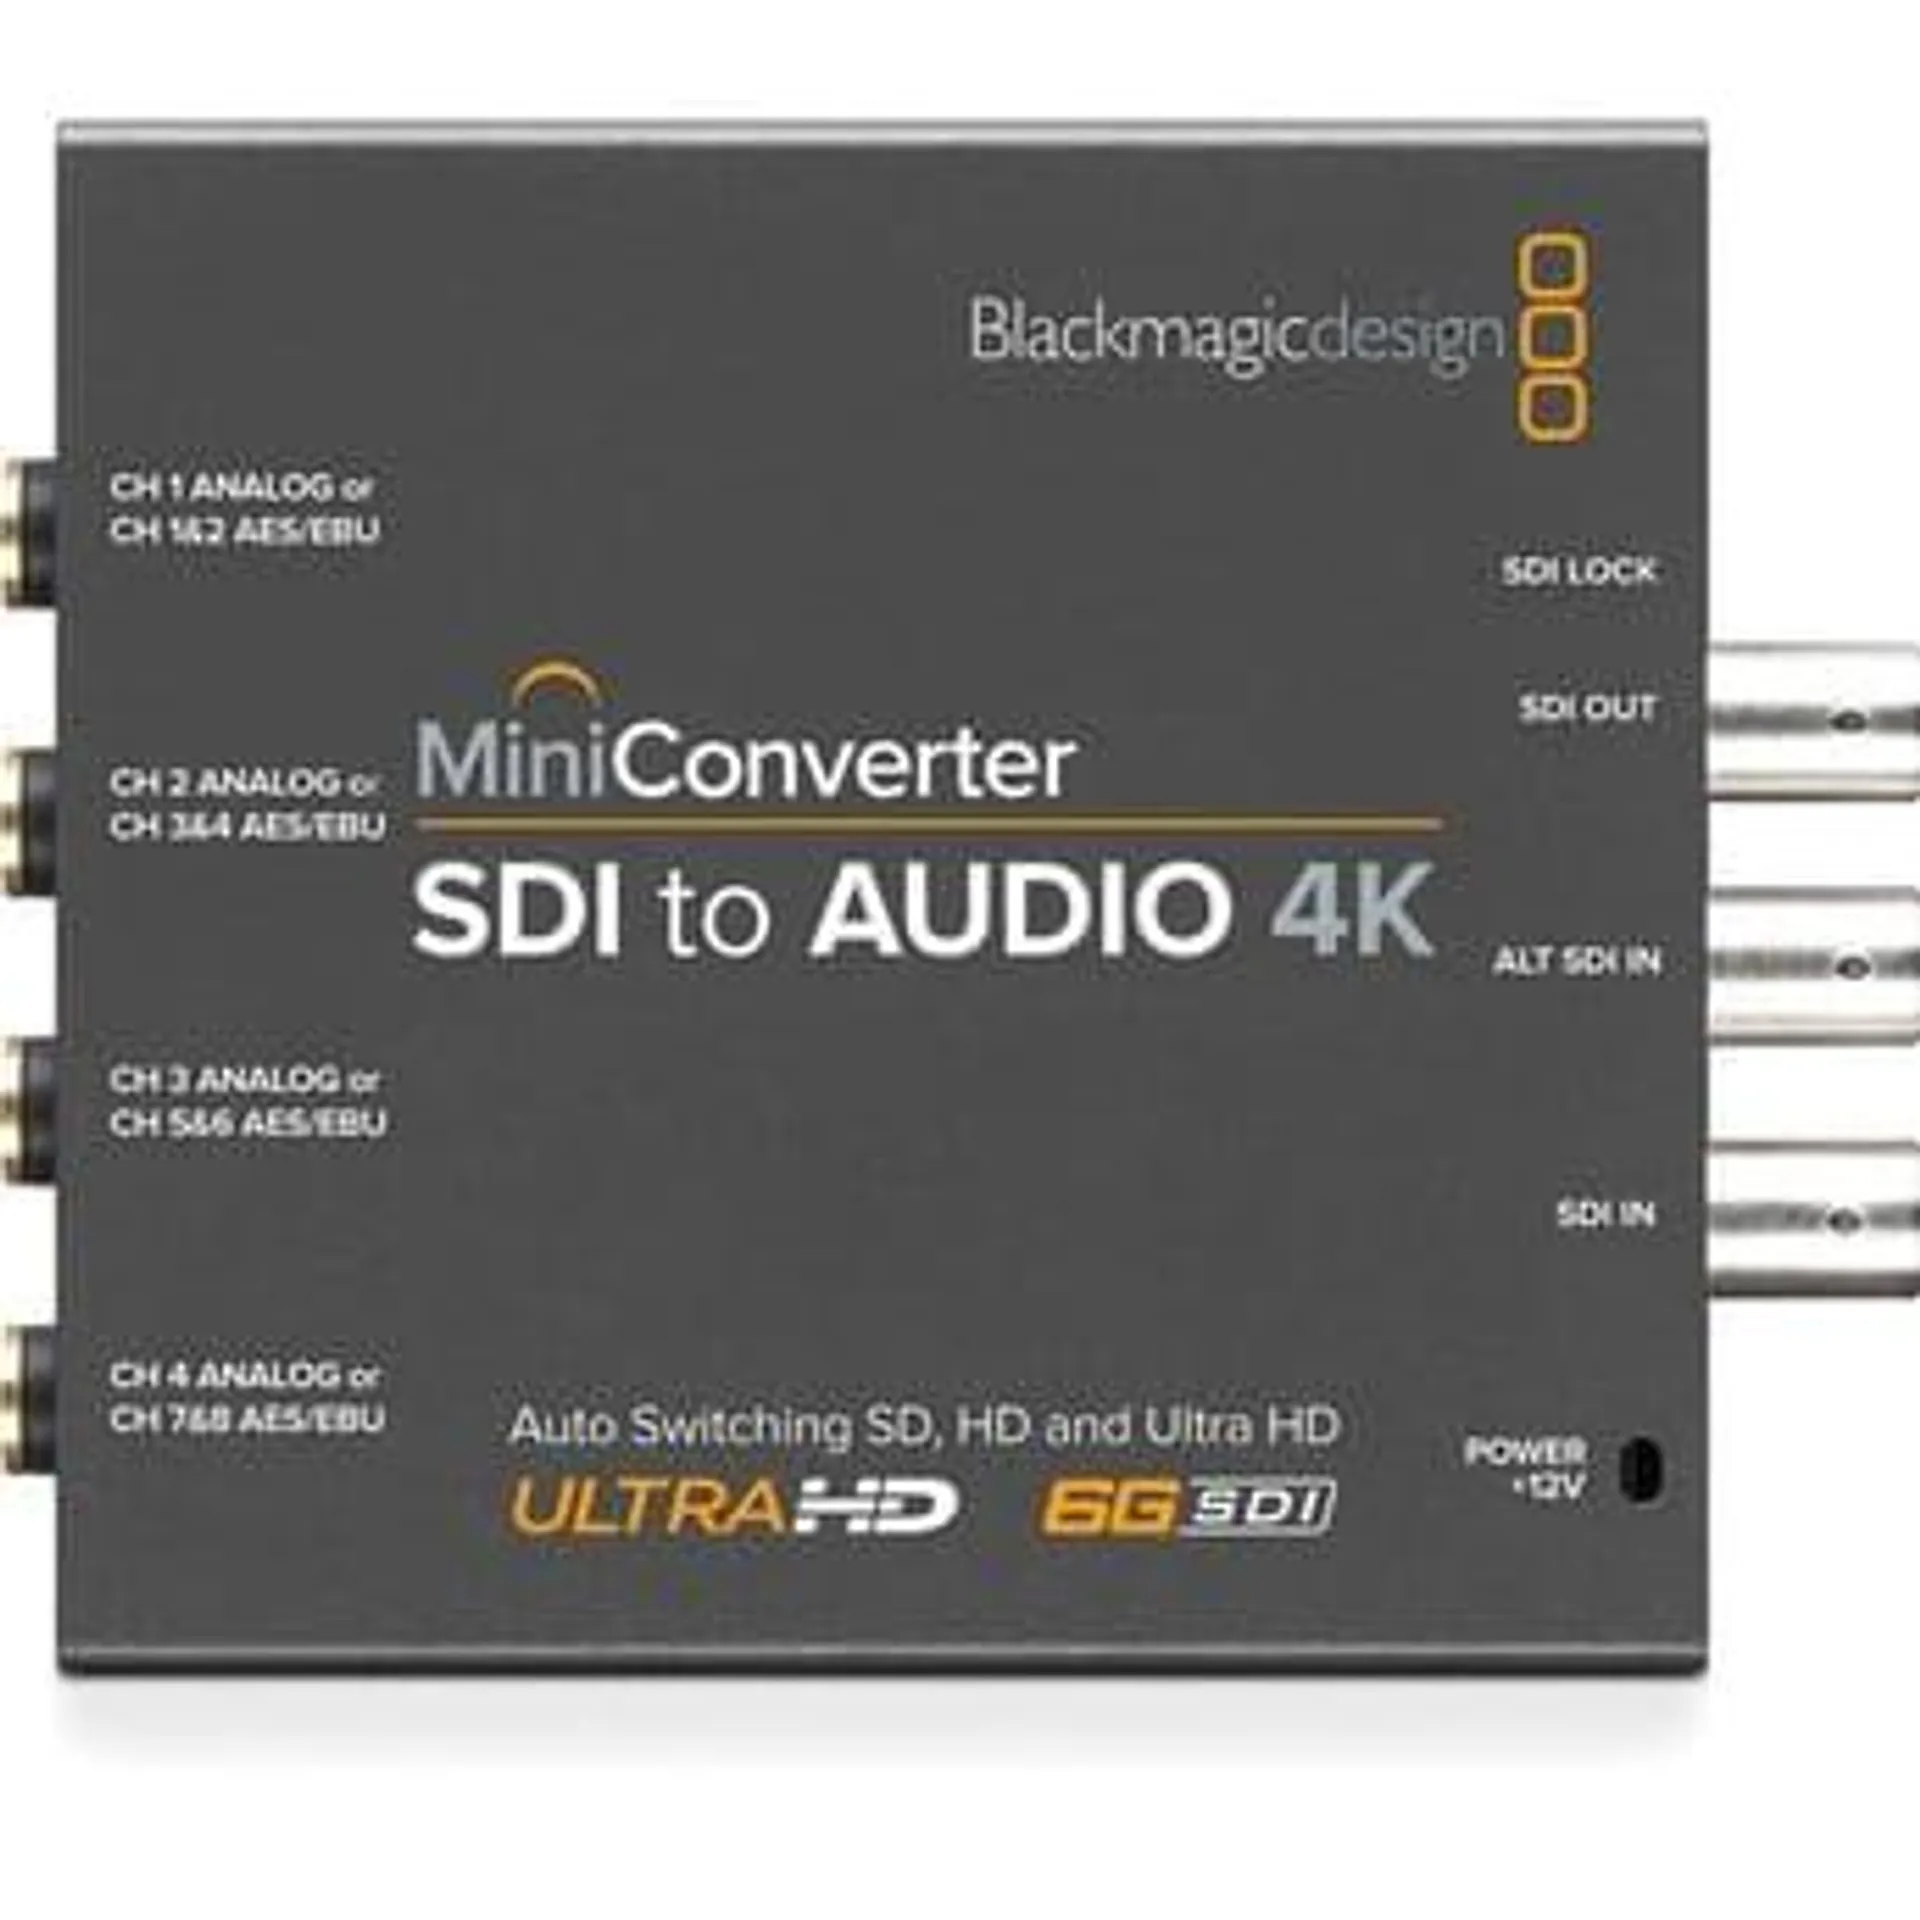 Blackmagic Design SDI to Audio 4K Mini Converter